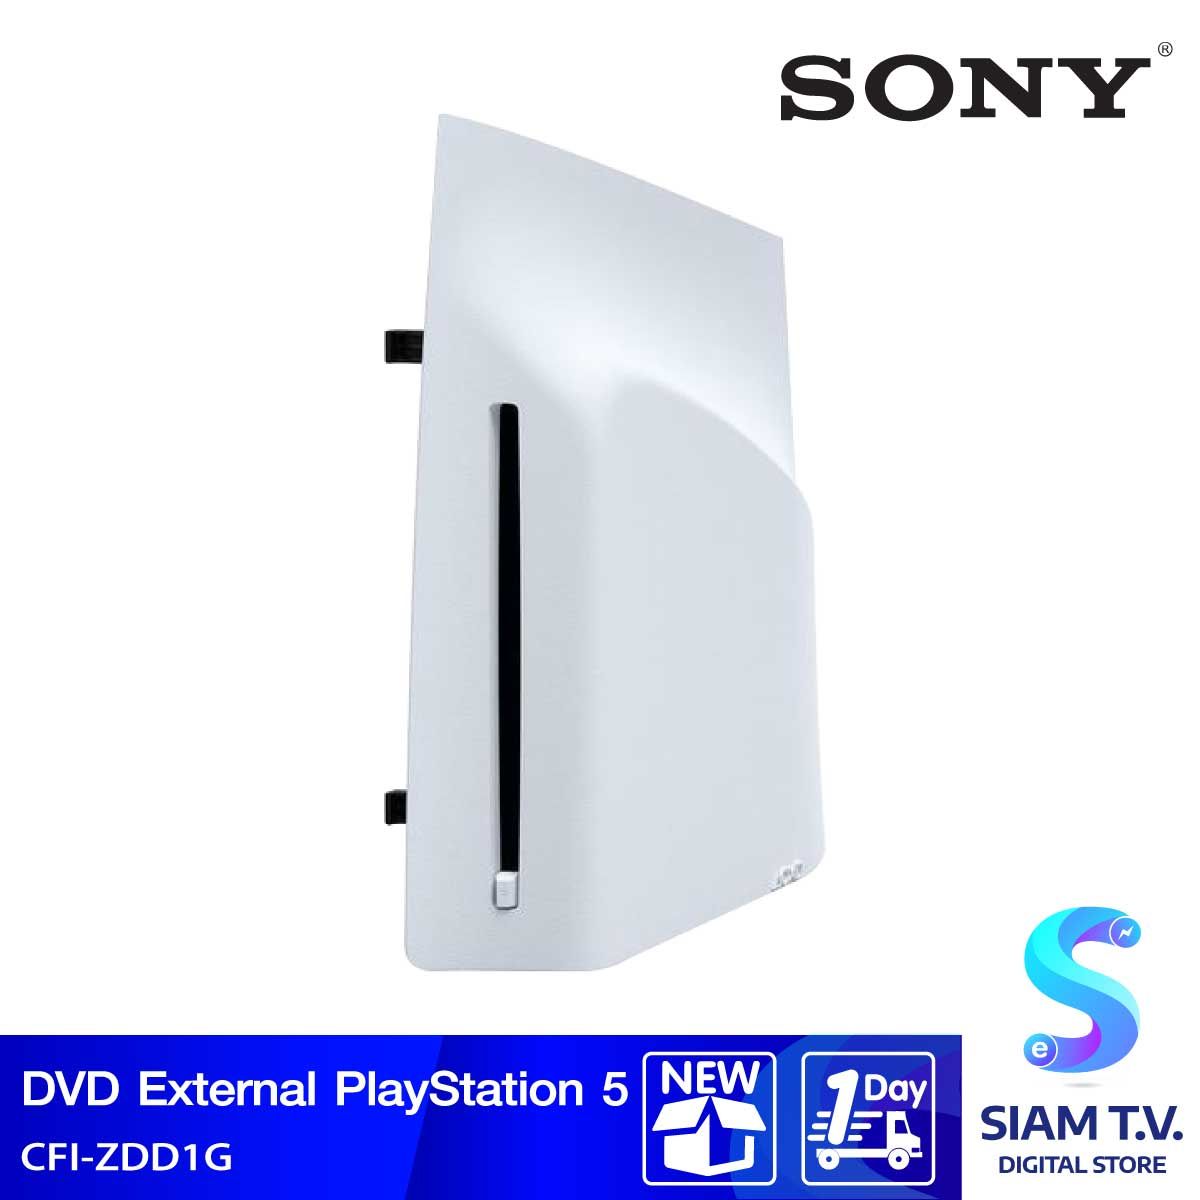 SONY DVD External PlayStation 5 รุ่น CFI-ZDD1G Disc Drive